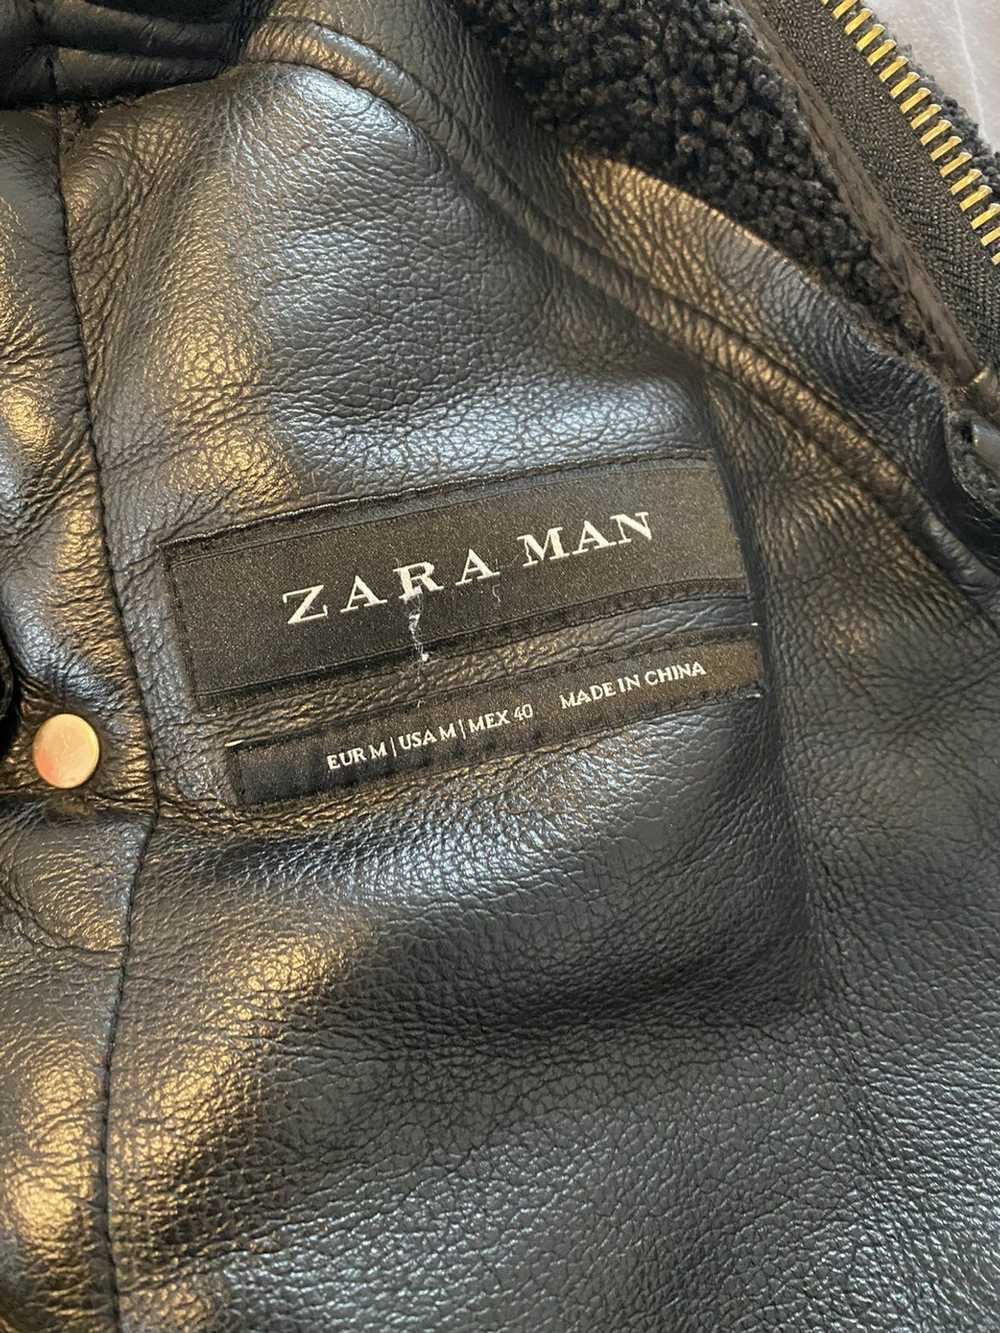 Zara Black Long Double-Faced Coat - image 5